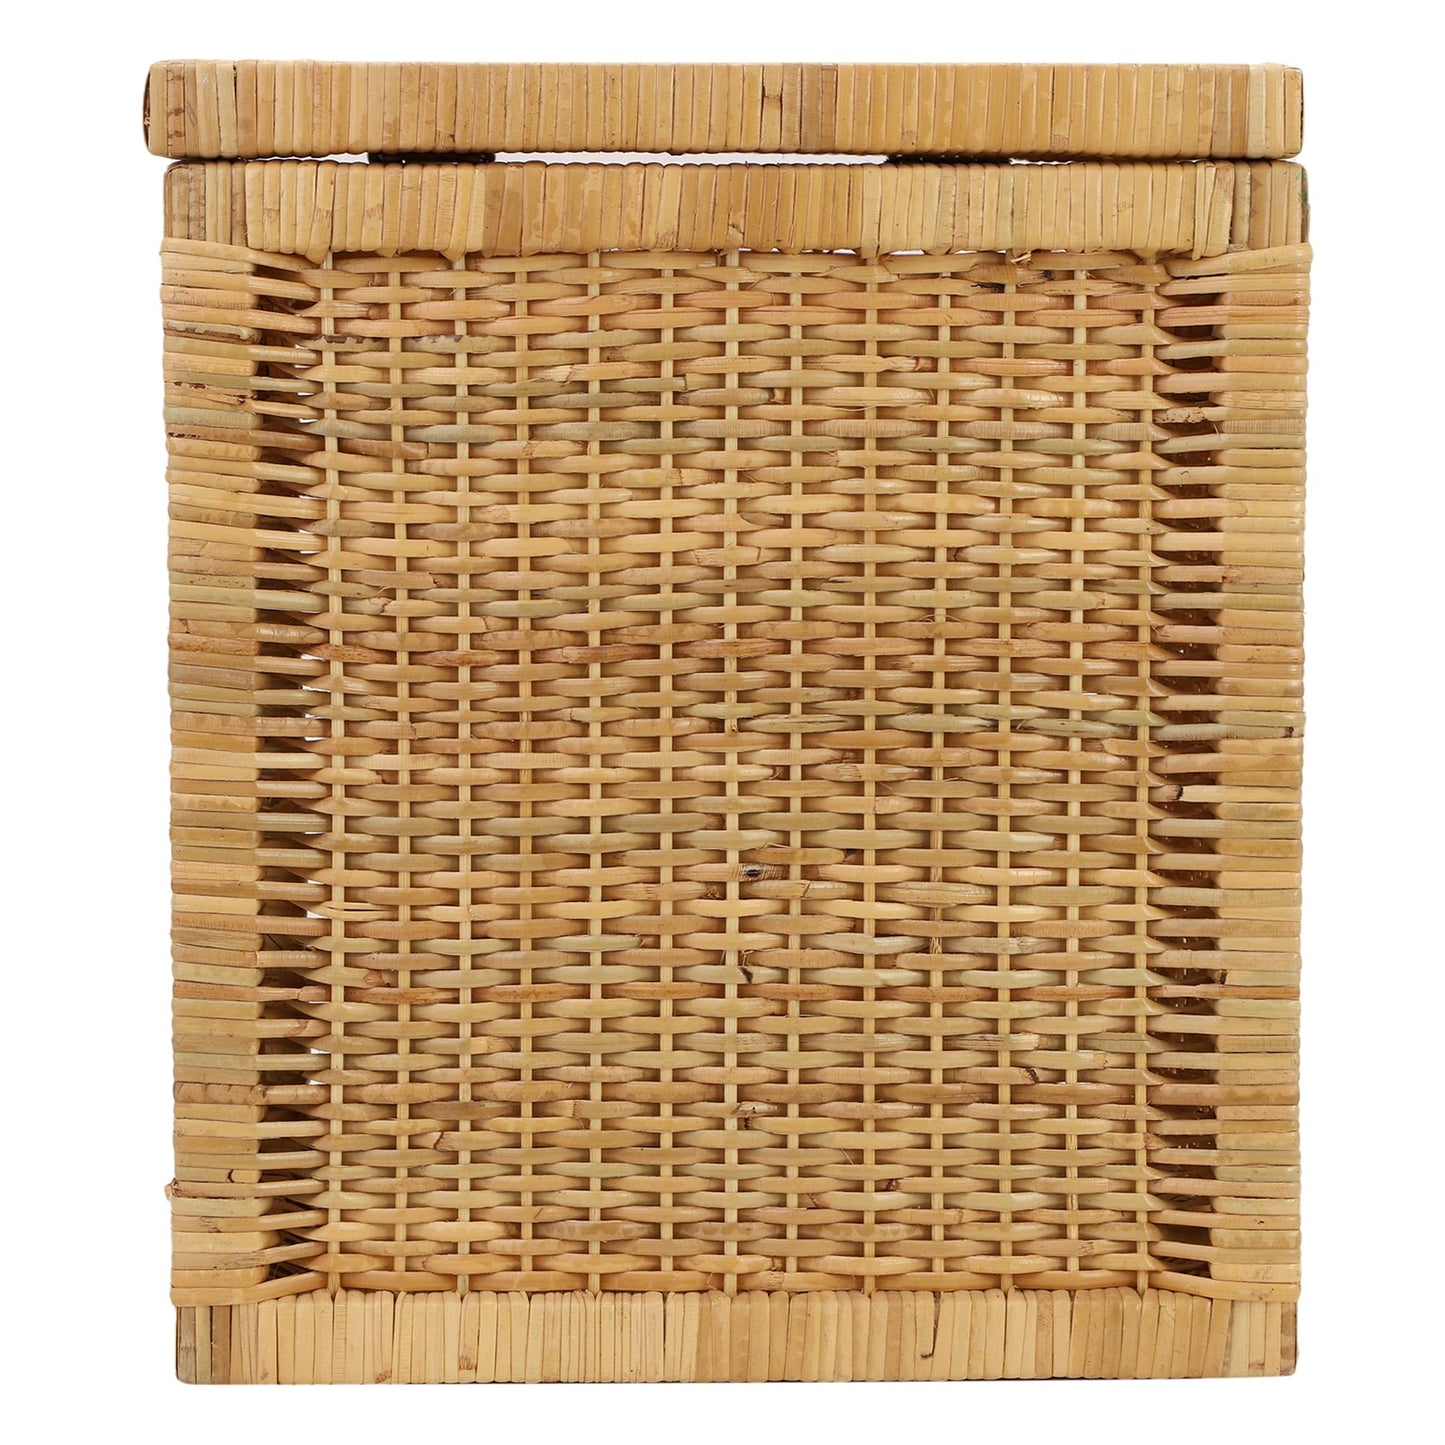 AKWAY wicker water hyacinth kauna grass bamboo cane Storage Basket with Lids | laundry hampers for bathroom wicker laundry basket storage basket(14"L x 14"W x 16"H)- Akway